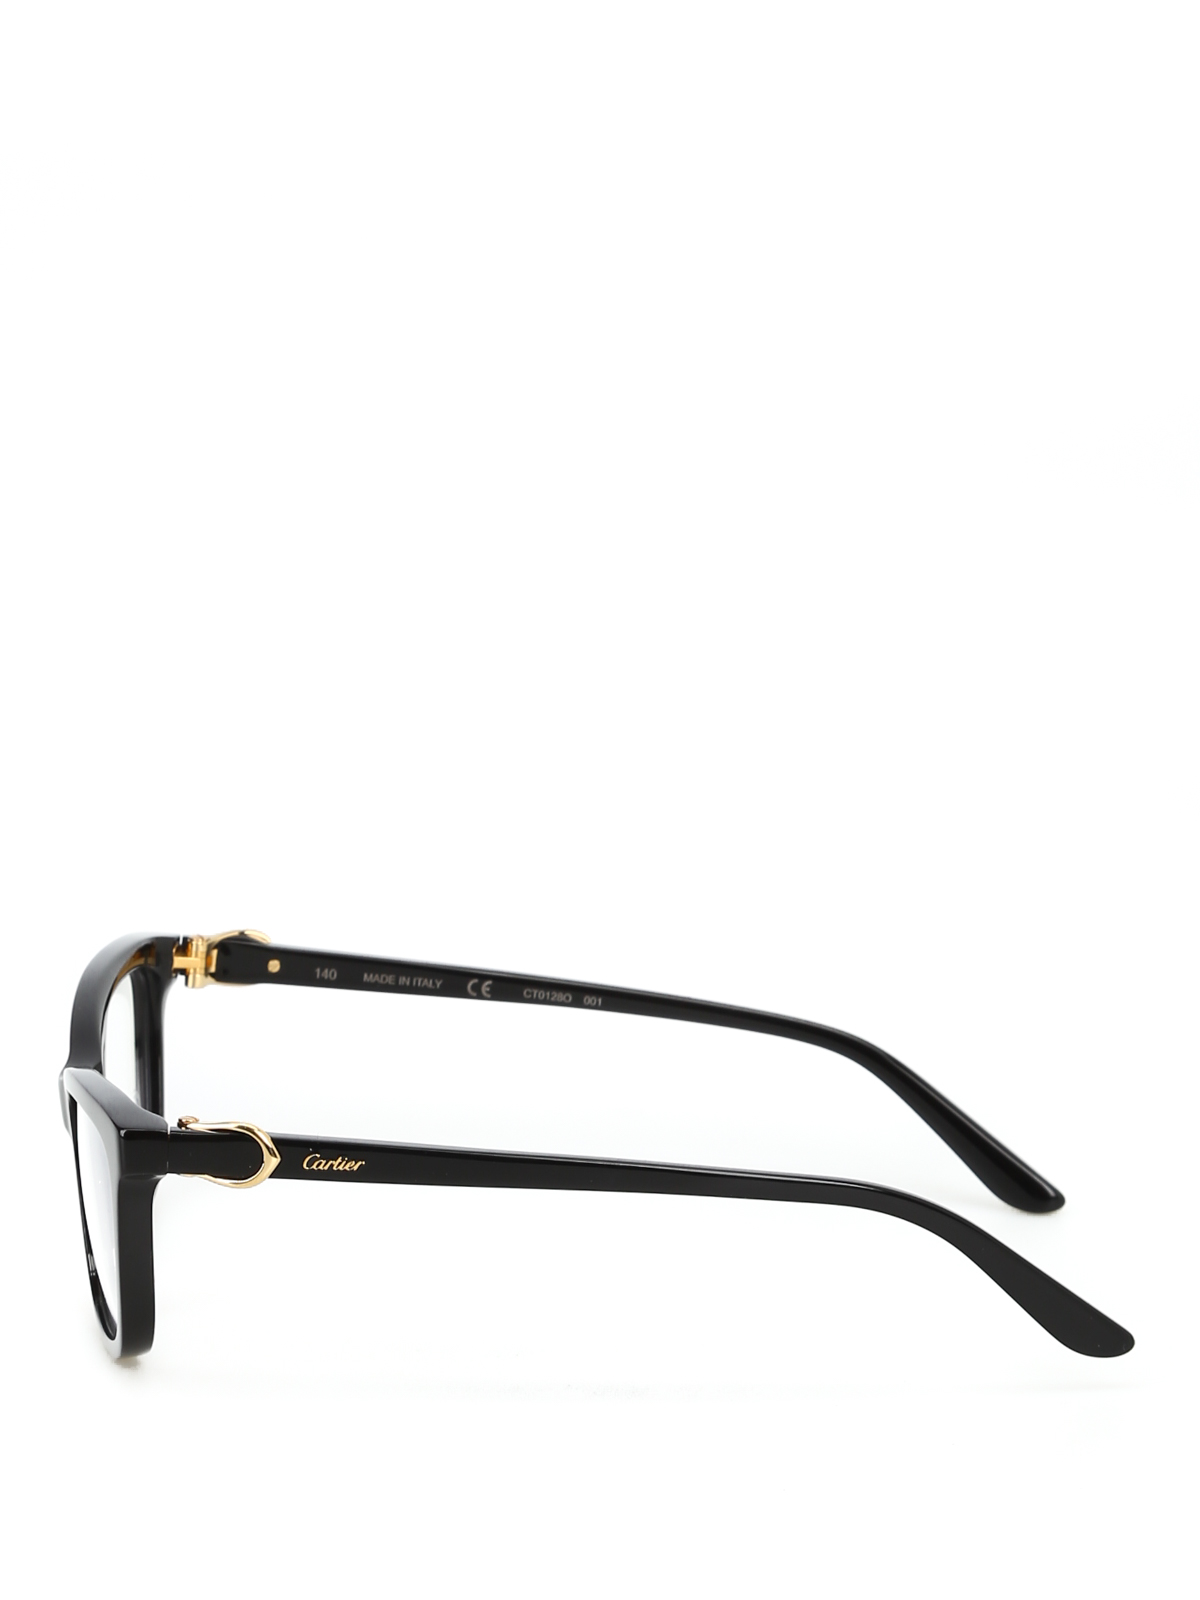 Cartier - Black acetate eyeglasses 